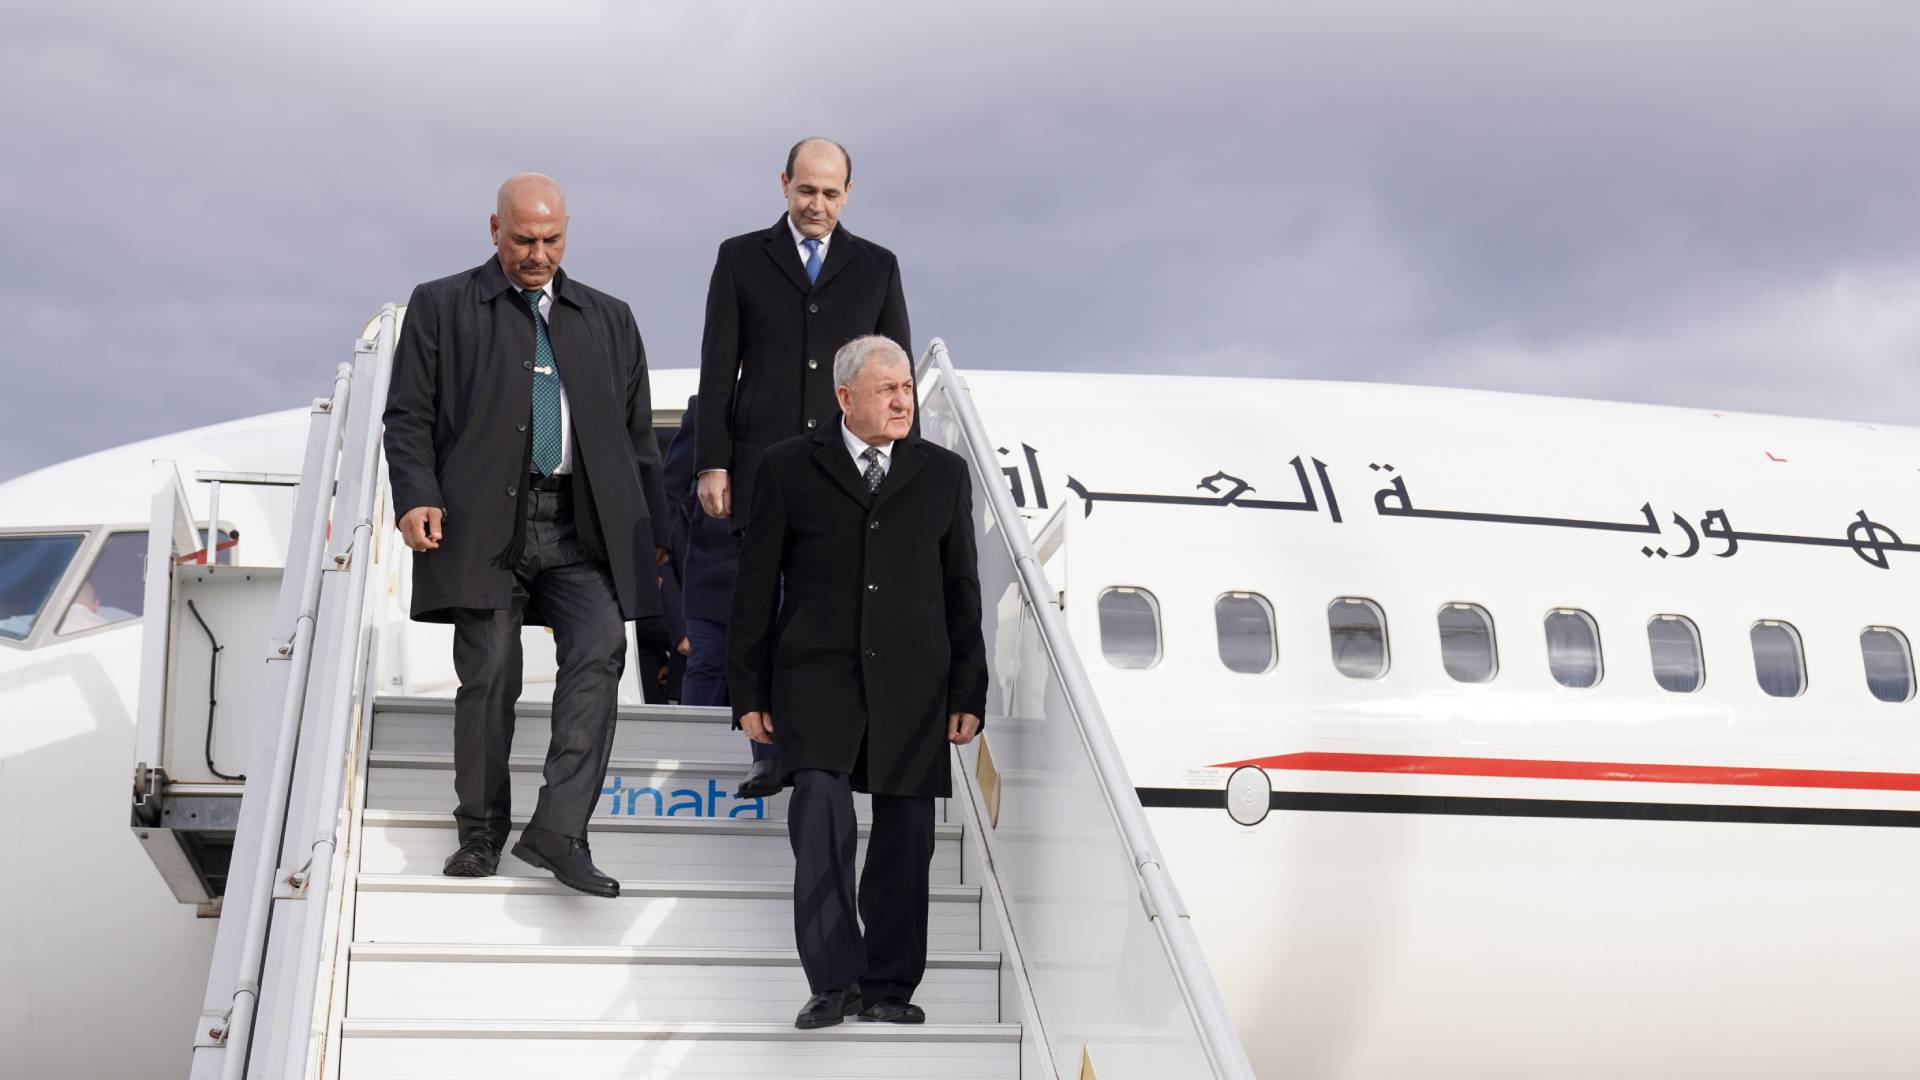  President Rashid walking in the front. Photo Credit: Iraqi Presidency